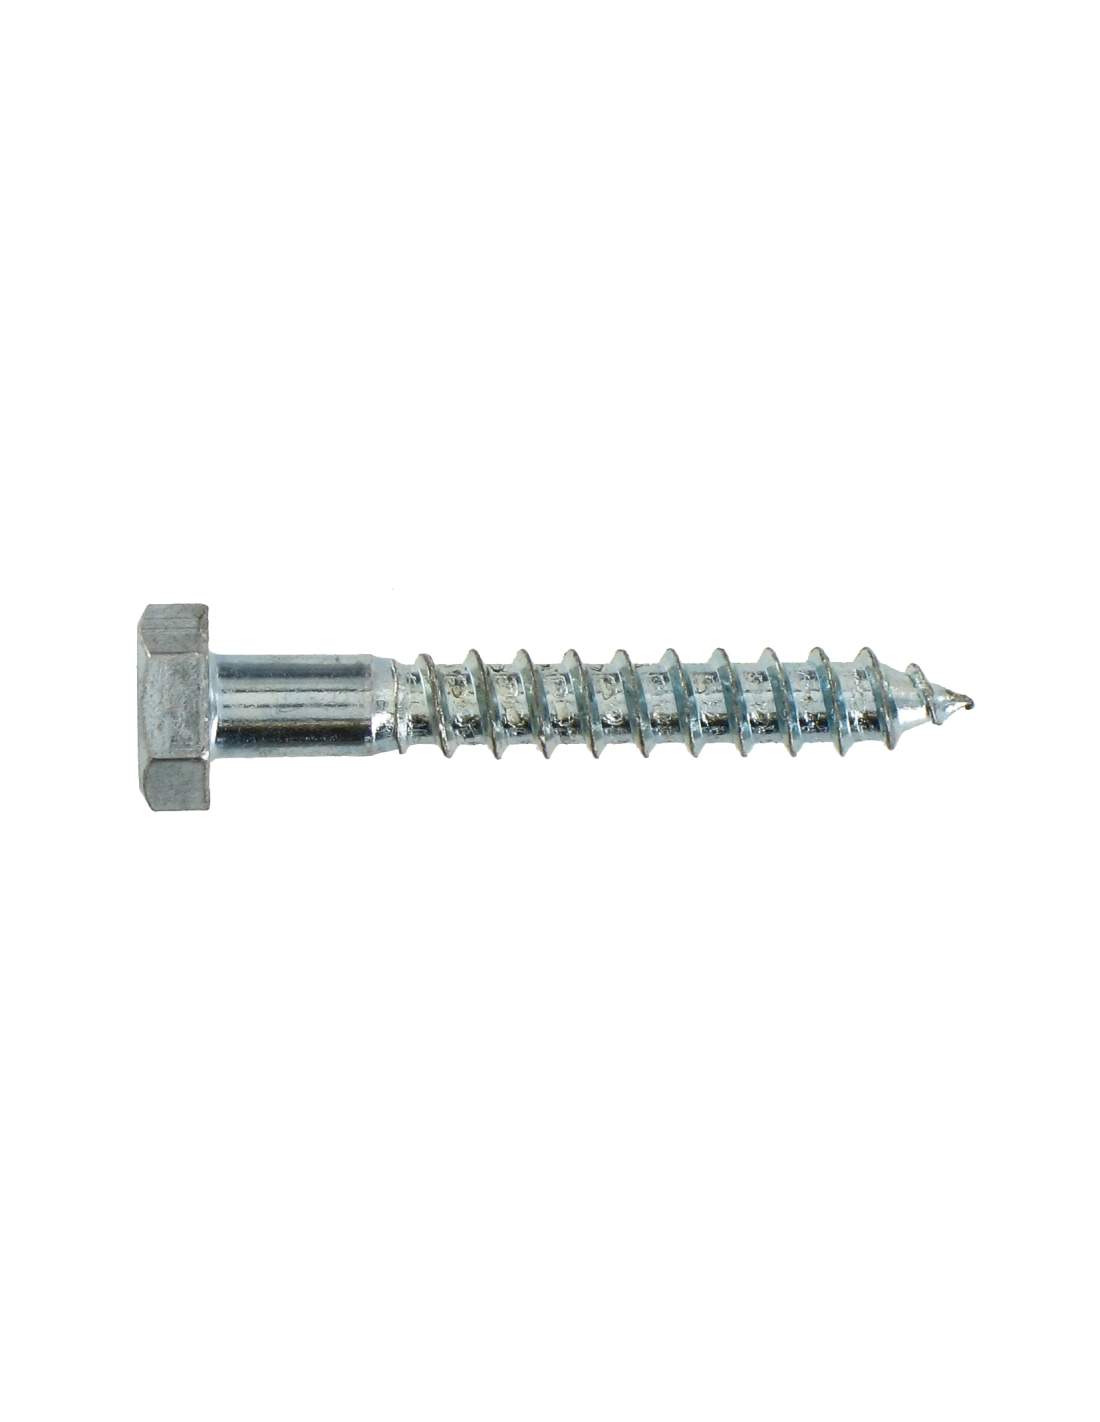 Zinc-plated steel lag bolt 10x120, 2 pieces.